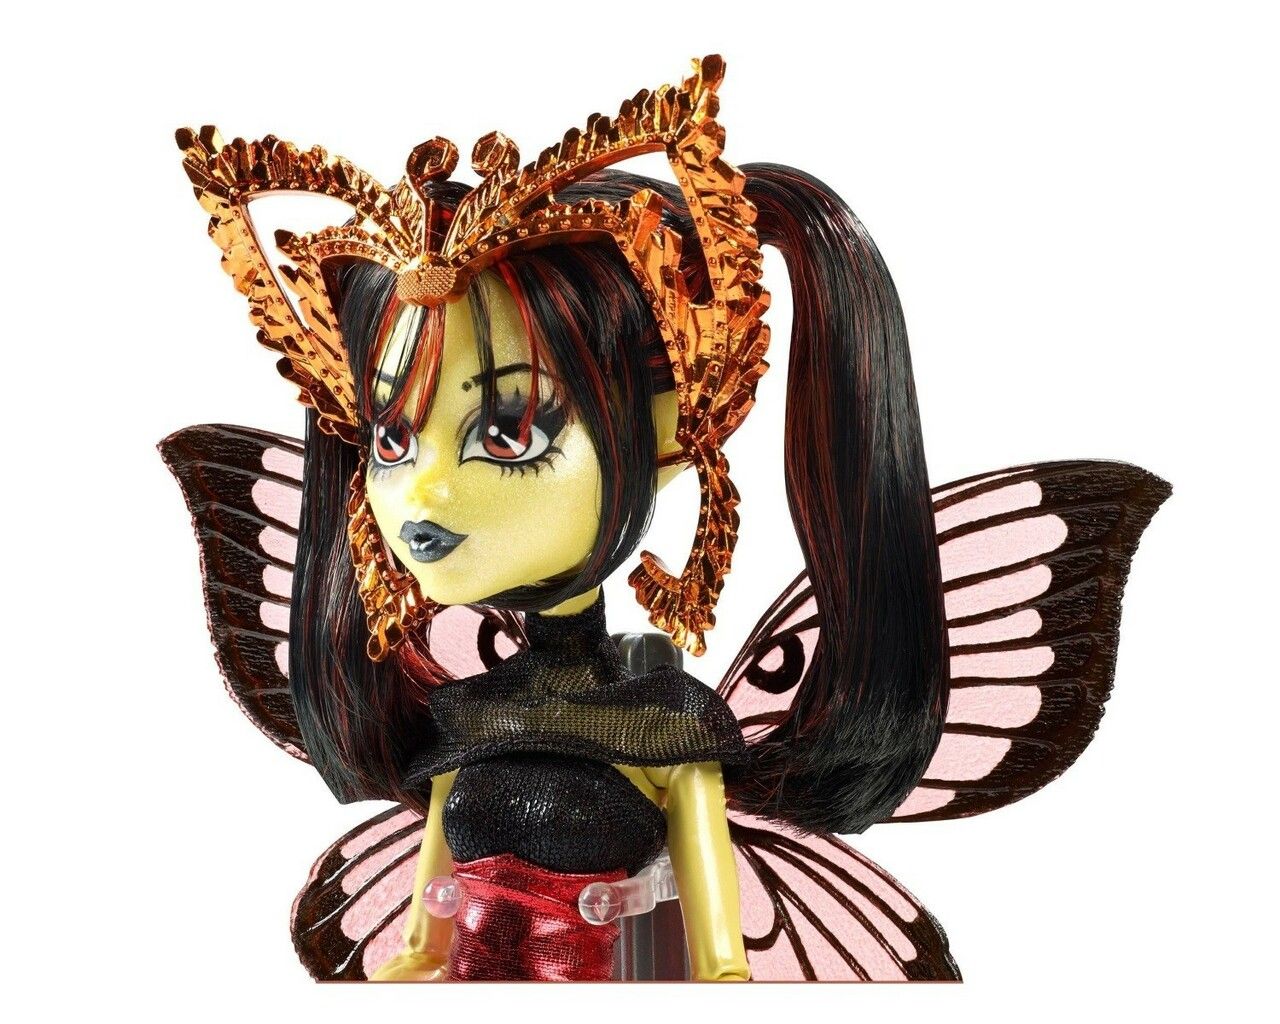 Monster High Boo York, Boo York Gala Ghoulfriends Mothews Doll (Box Damaged)